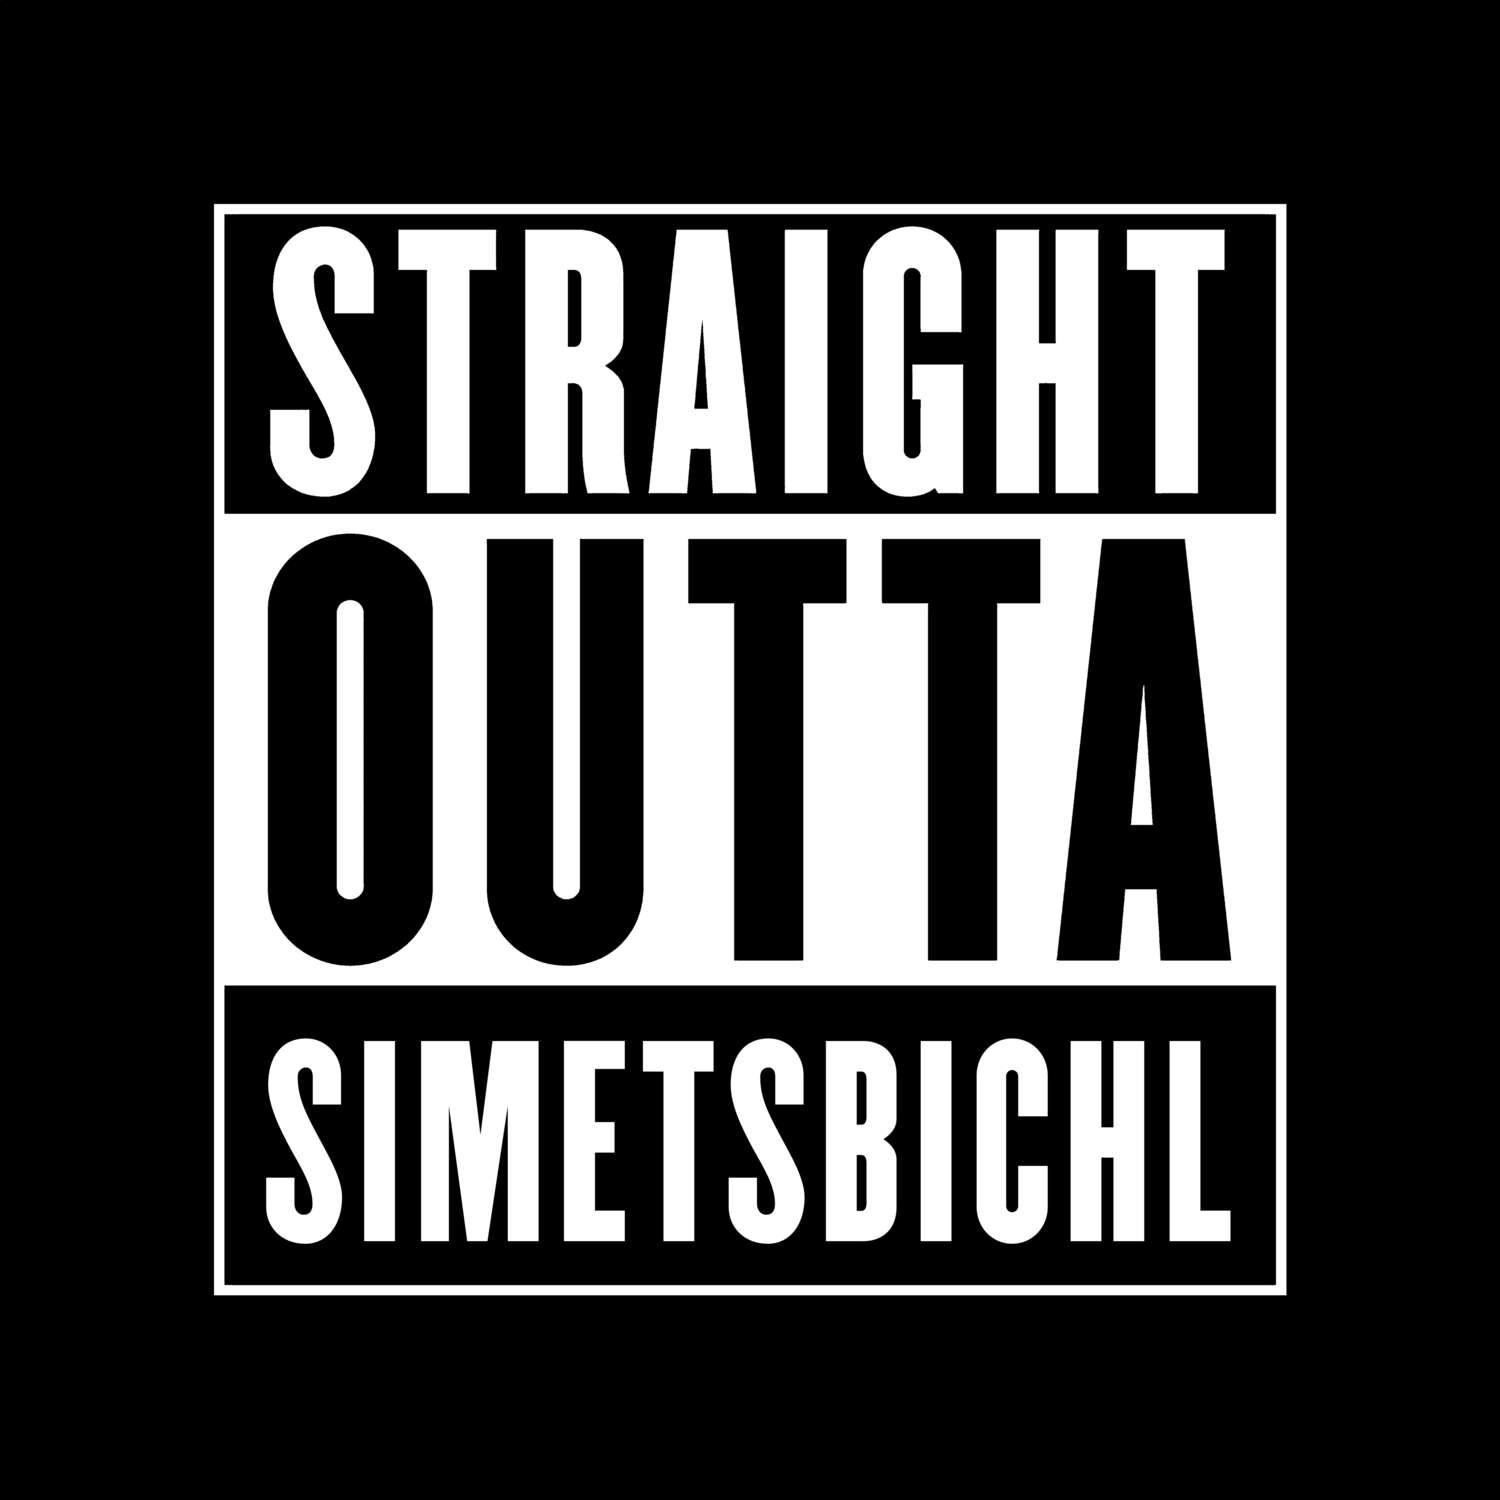 Simetsbichl T-Shirt »Straight Outta«